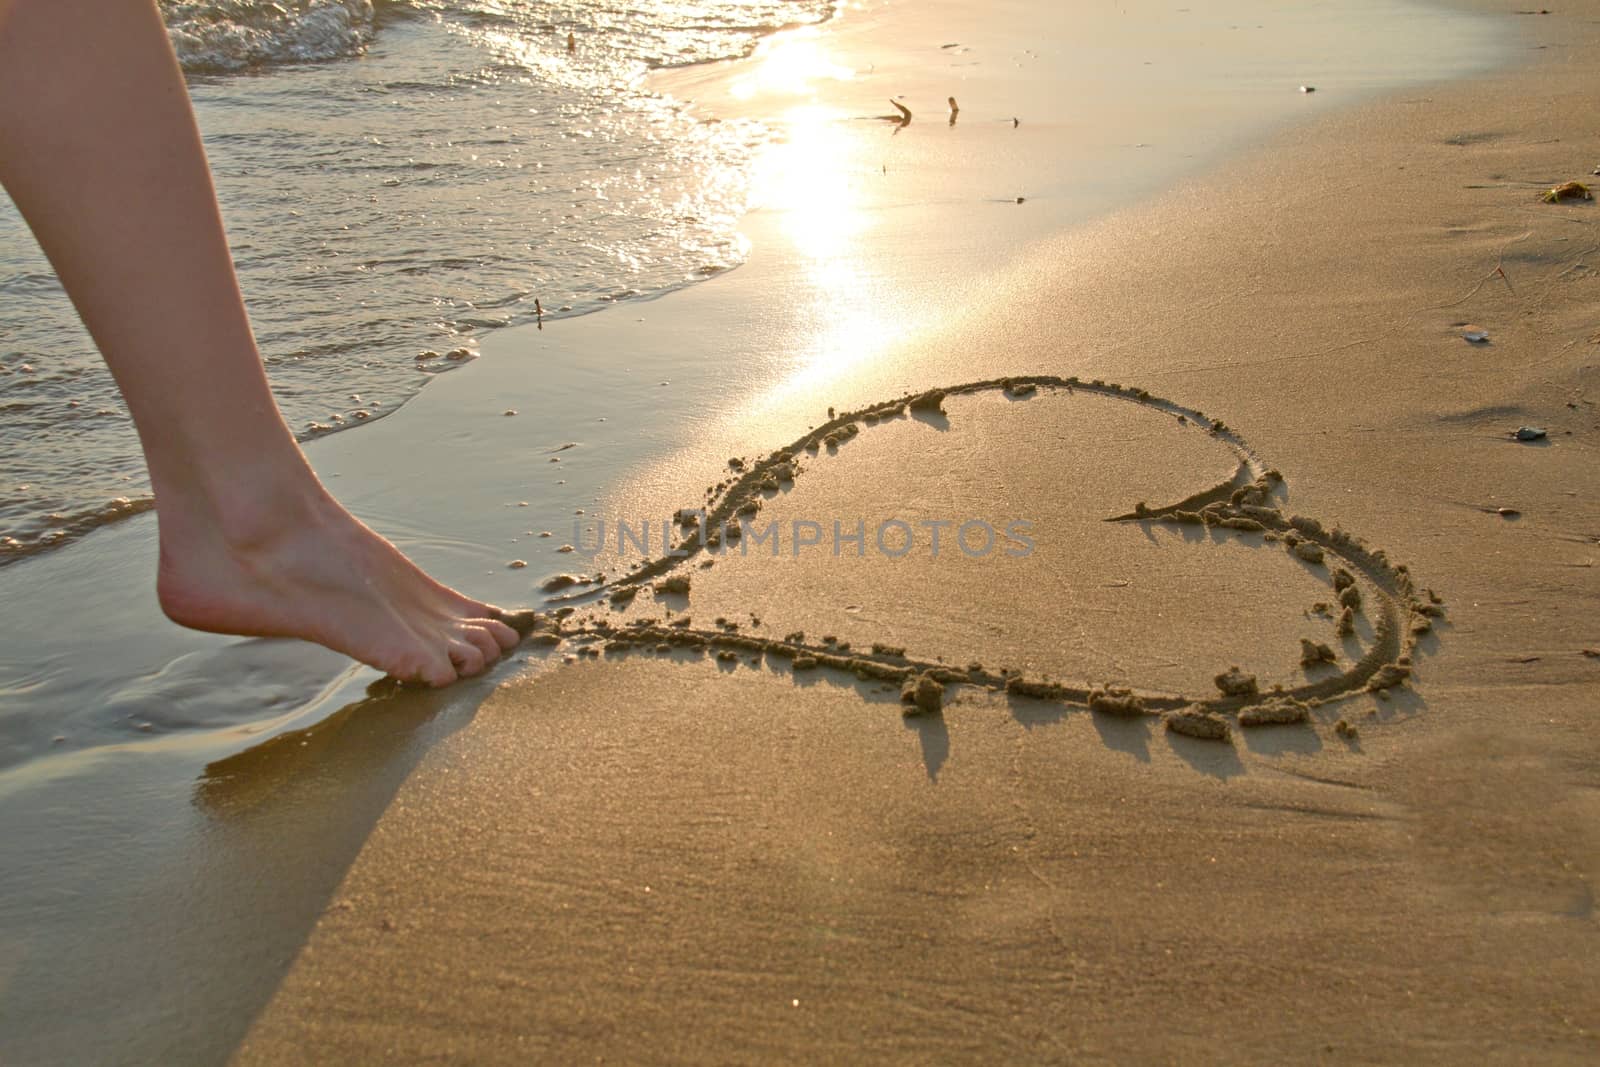 Heart in the sand by Dermot68